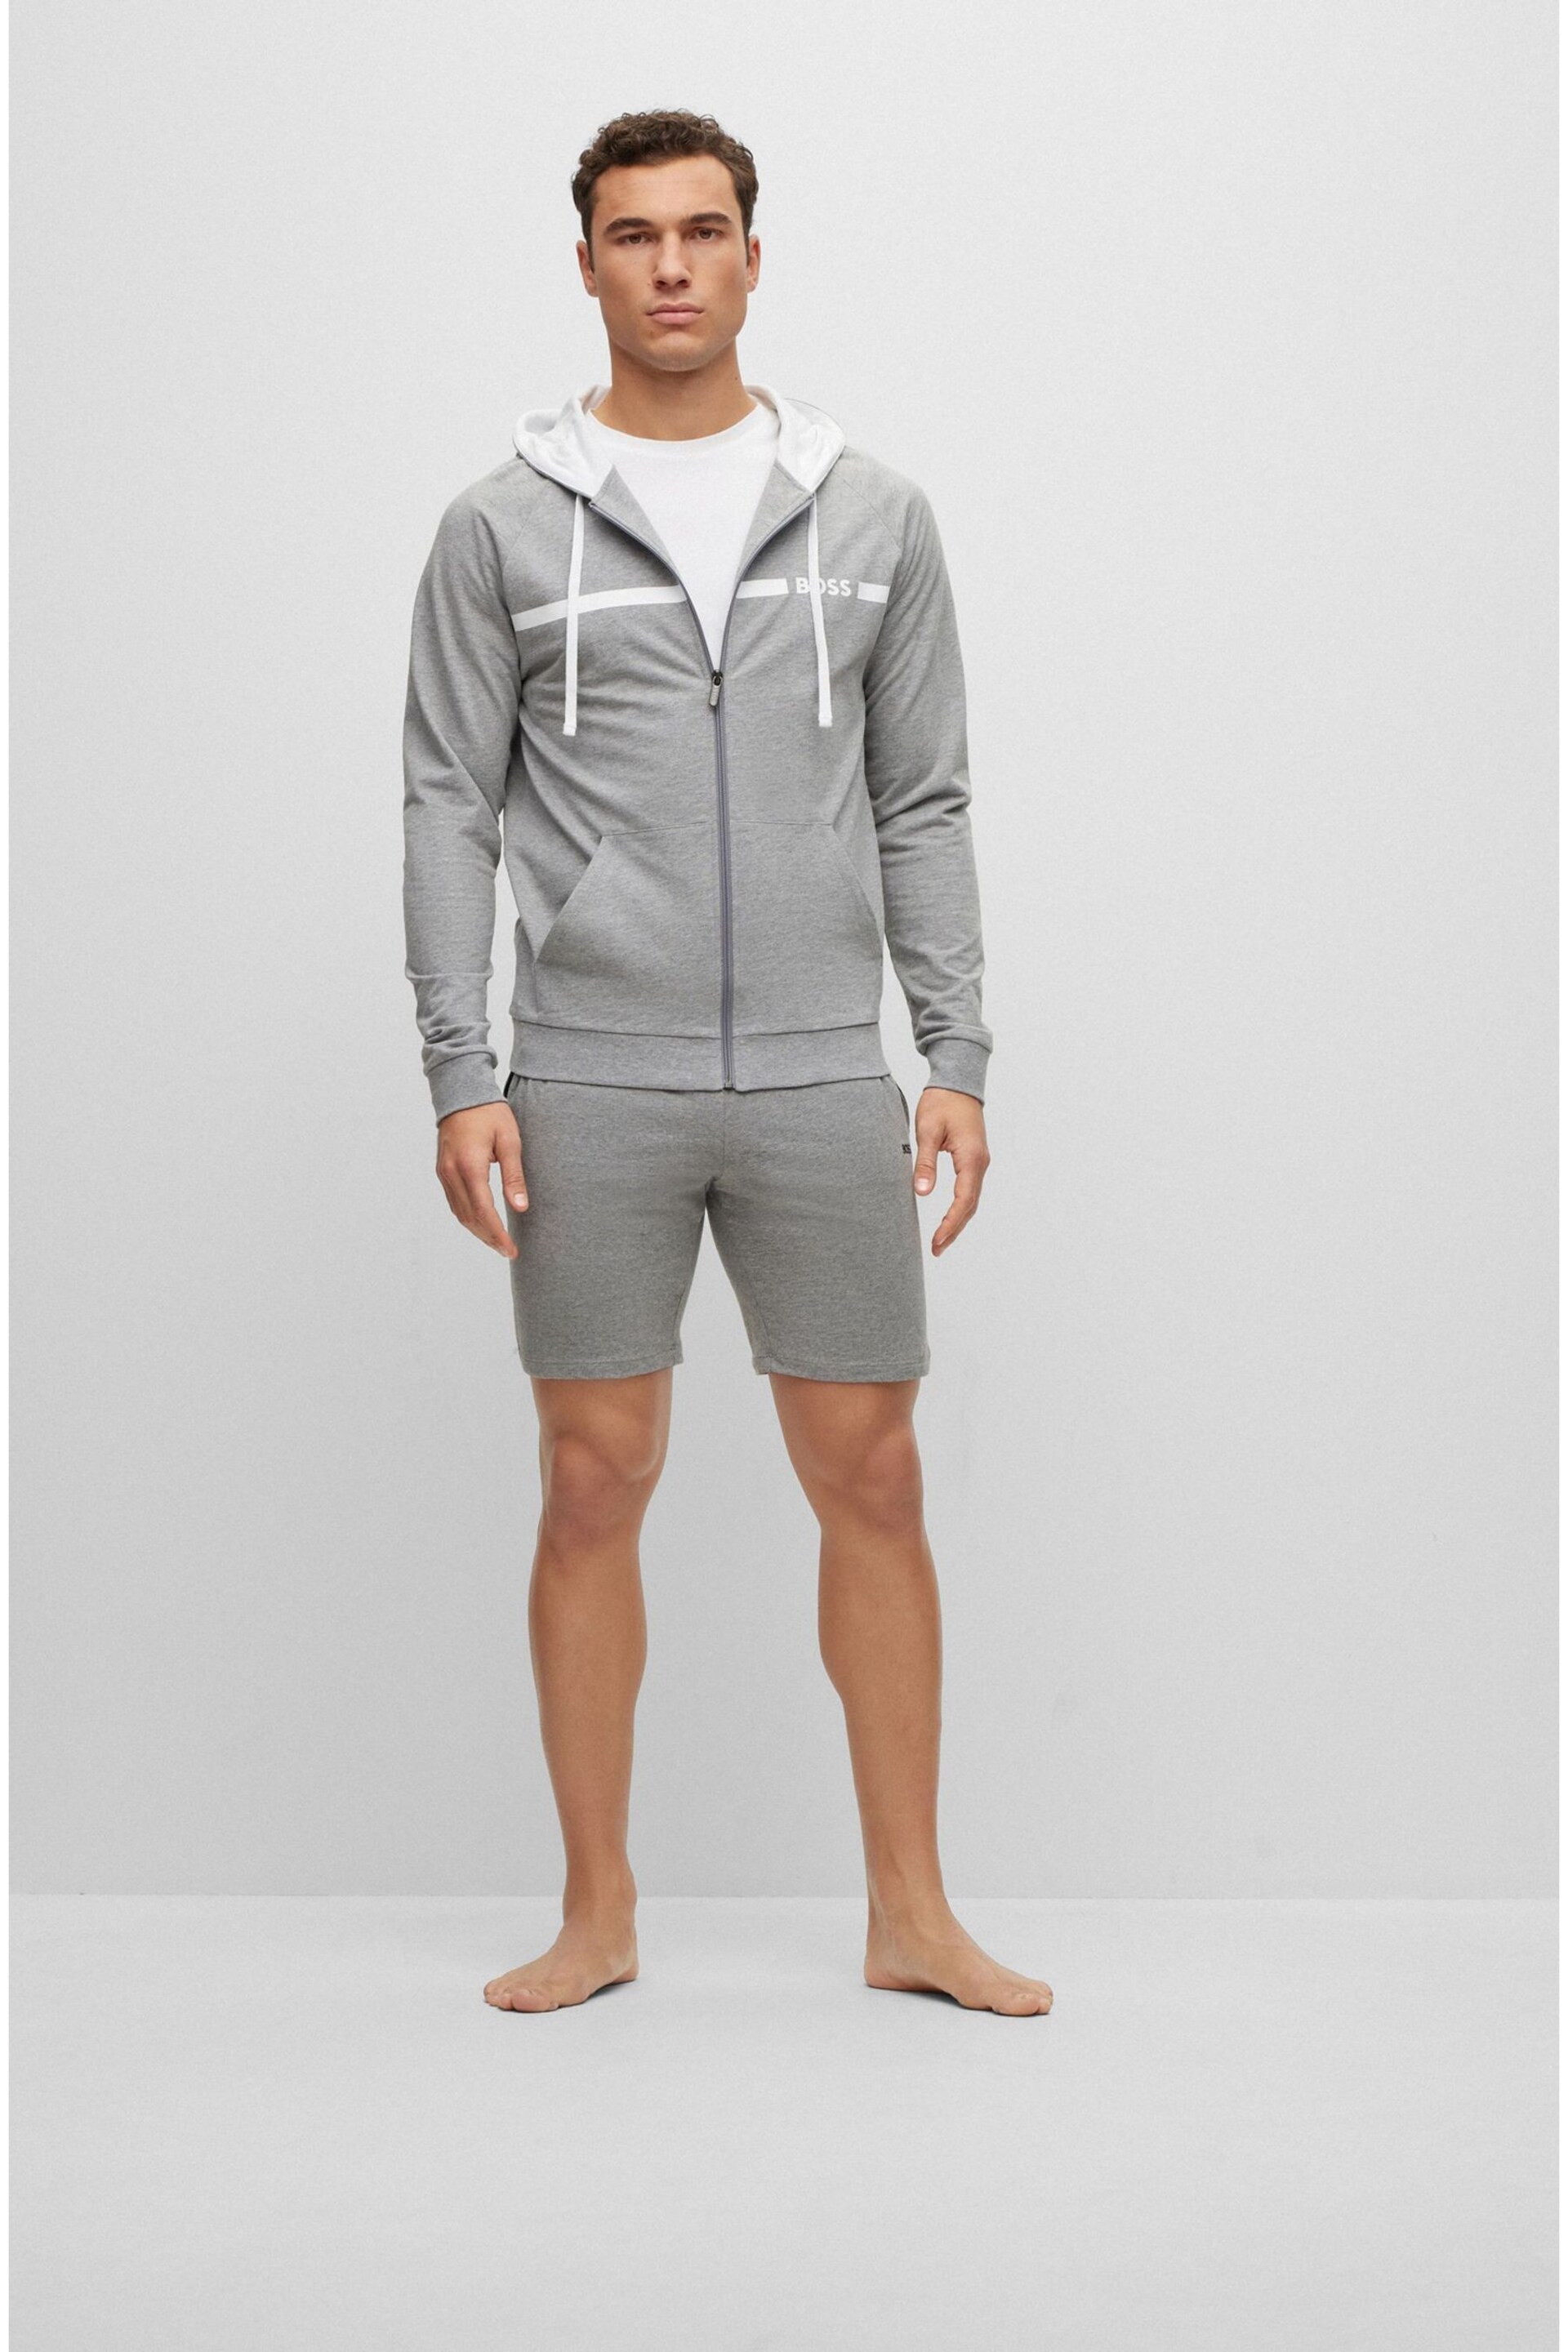 BOSS Grey Stretch Cotton Jersey Shorts - Image 3 of 5